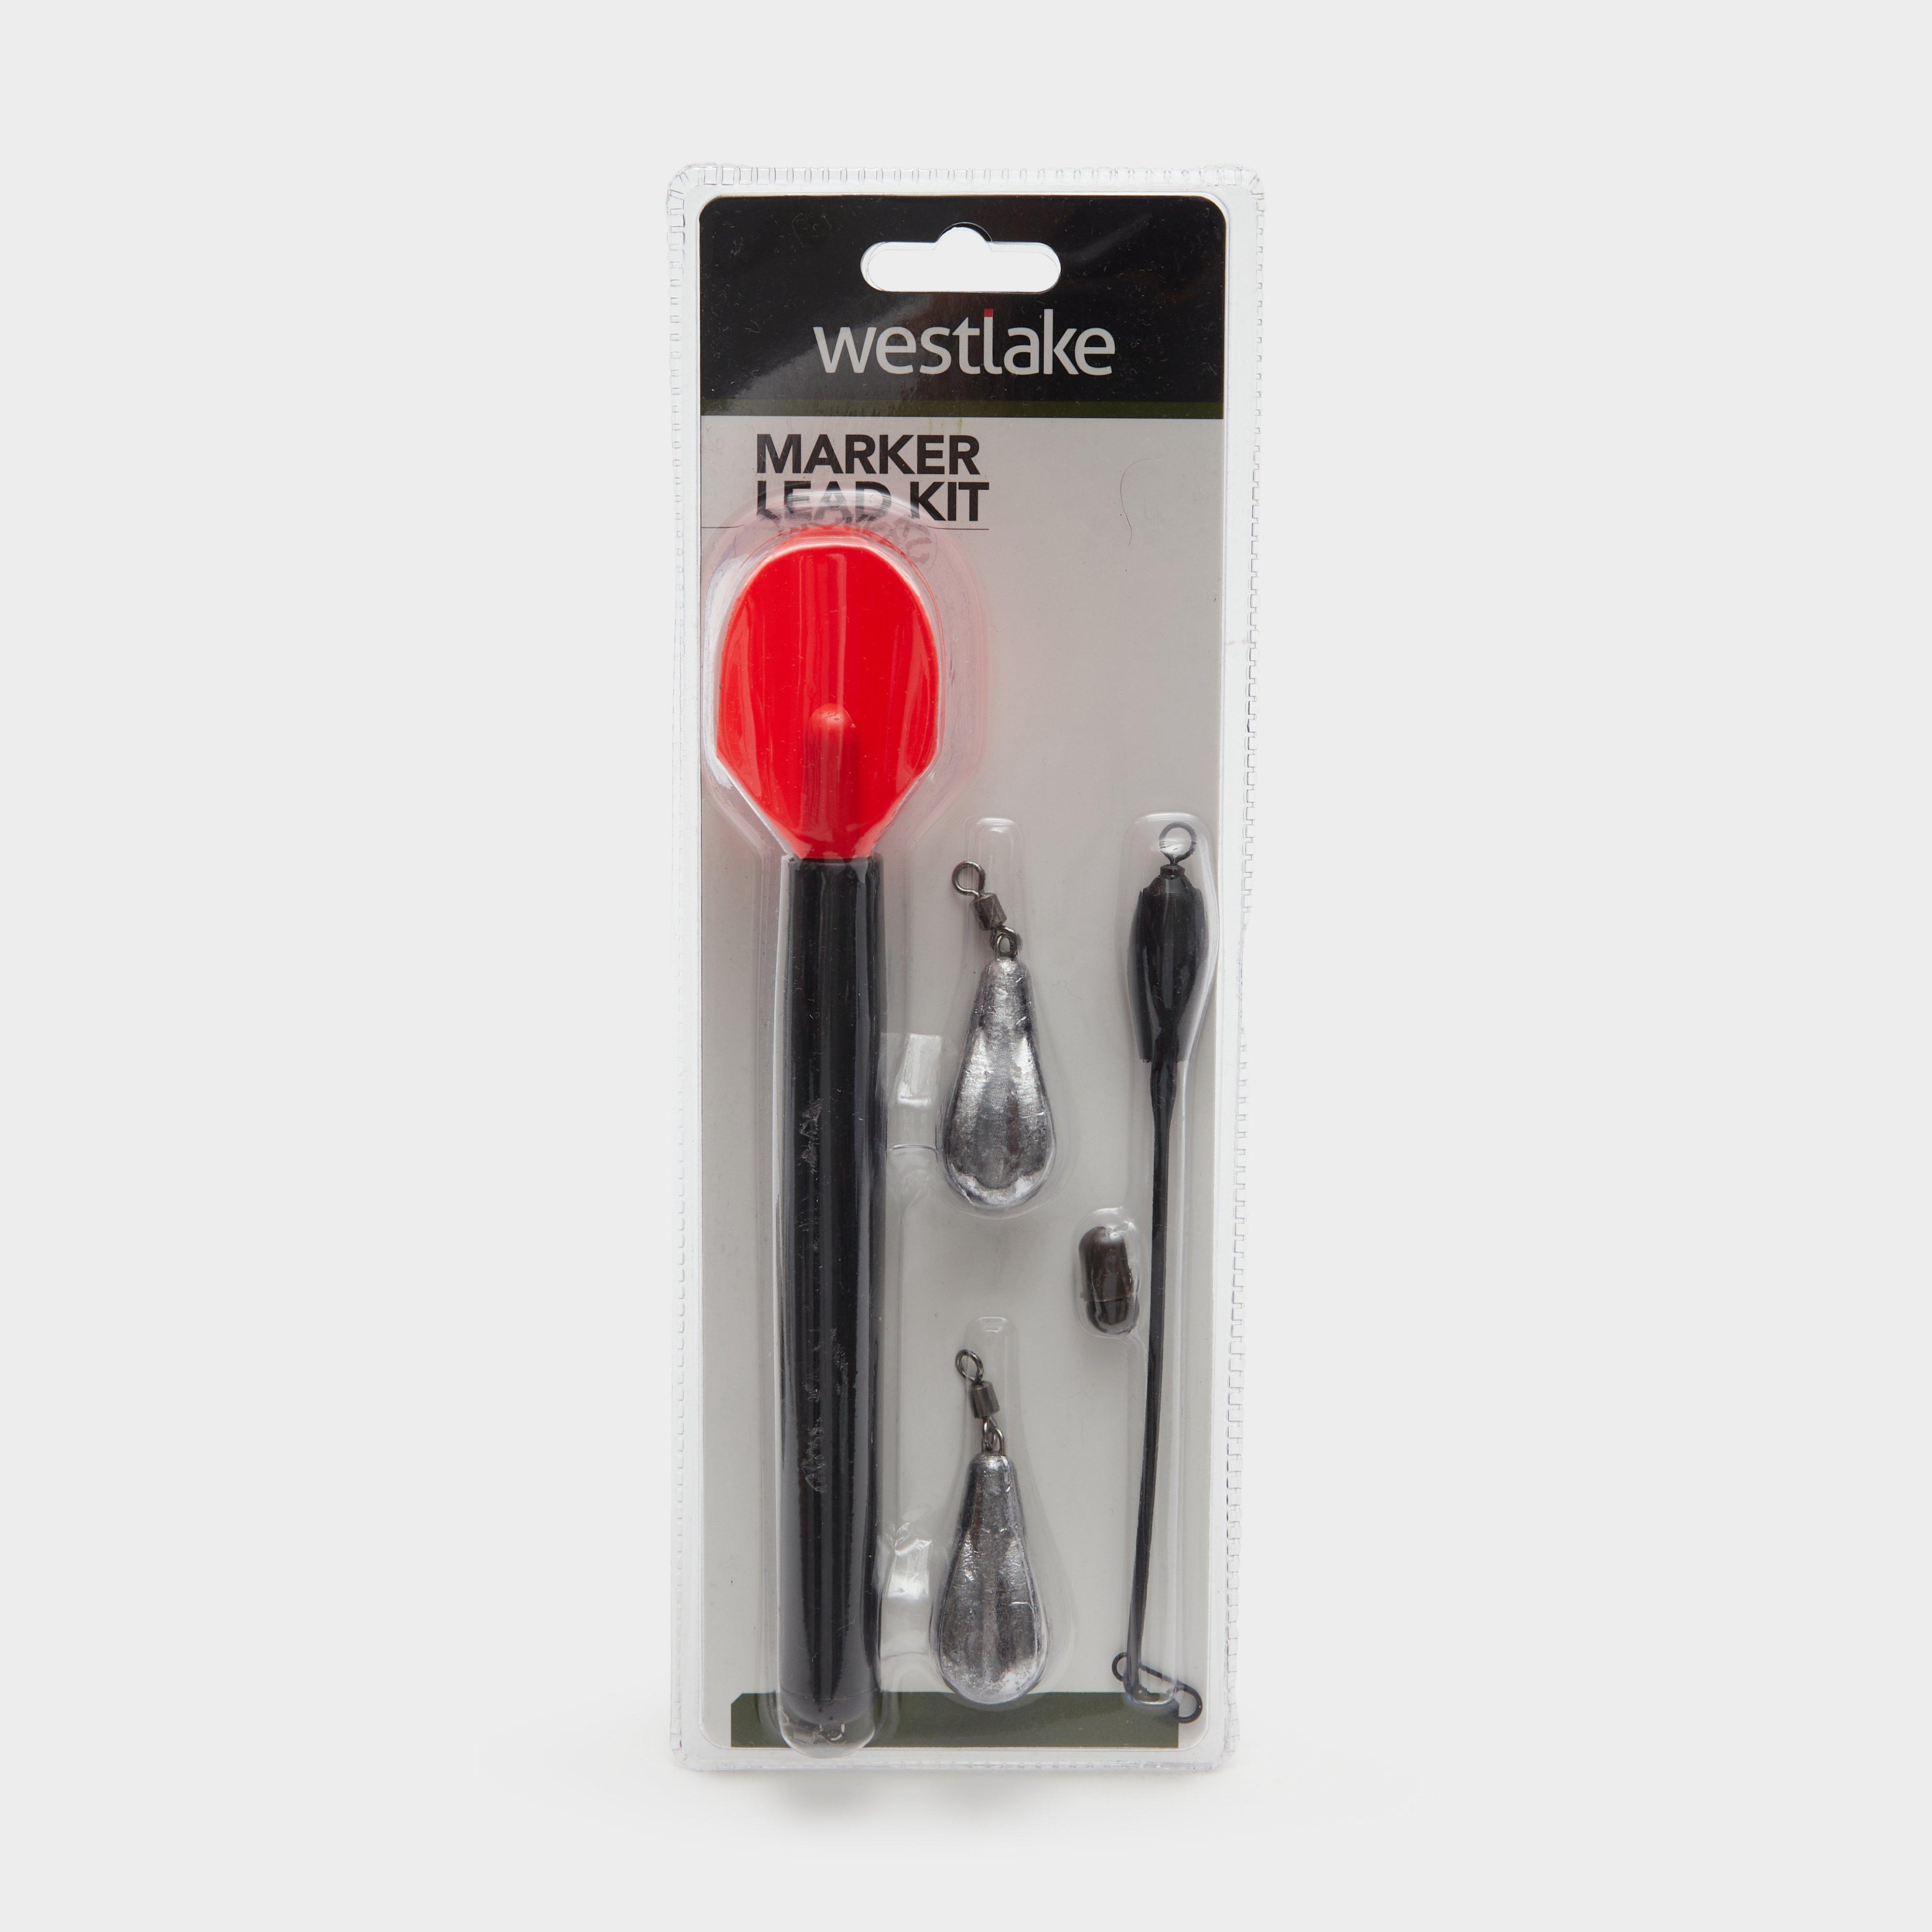 Westlake Marker Lead Kit - Black/kit  Black/kit